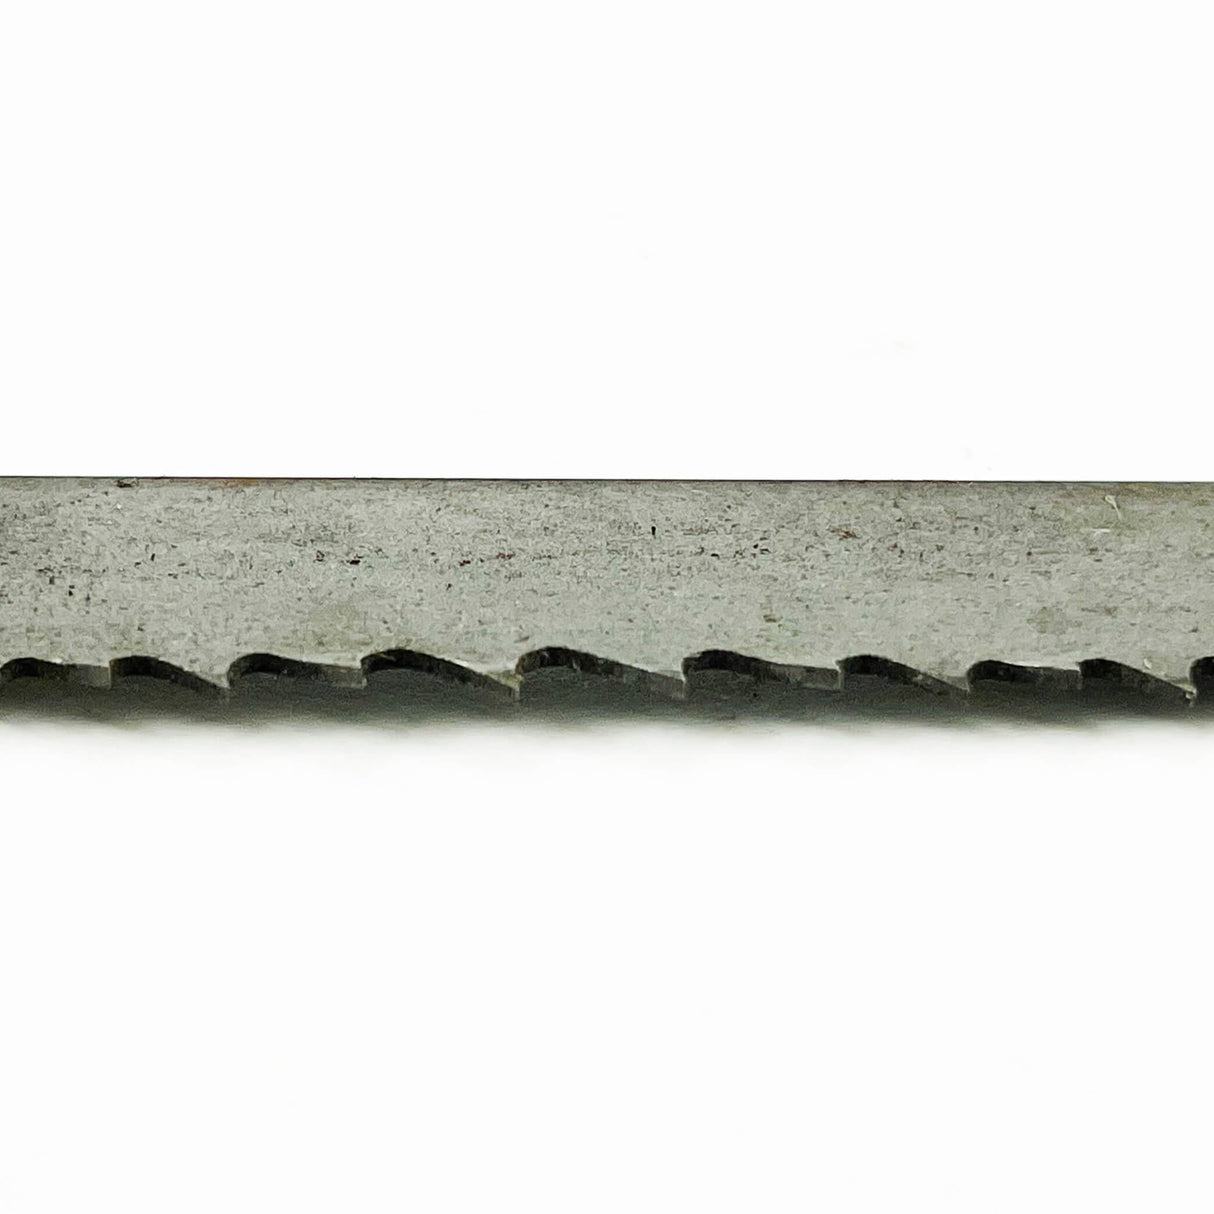 3050mm Long x 13mm Wide COBALT M42 Bi-Metal Band Saw - Pack of 2 Blades